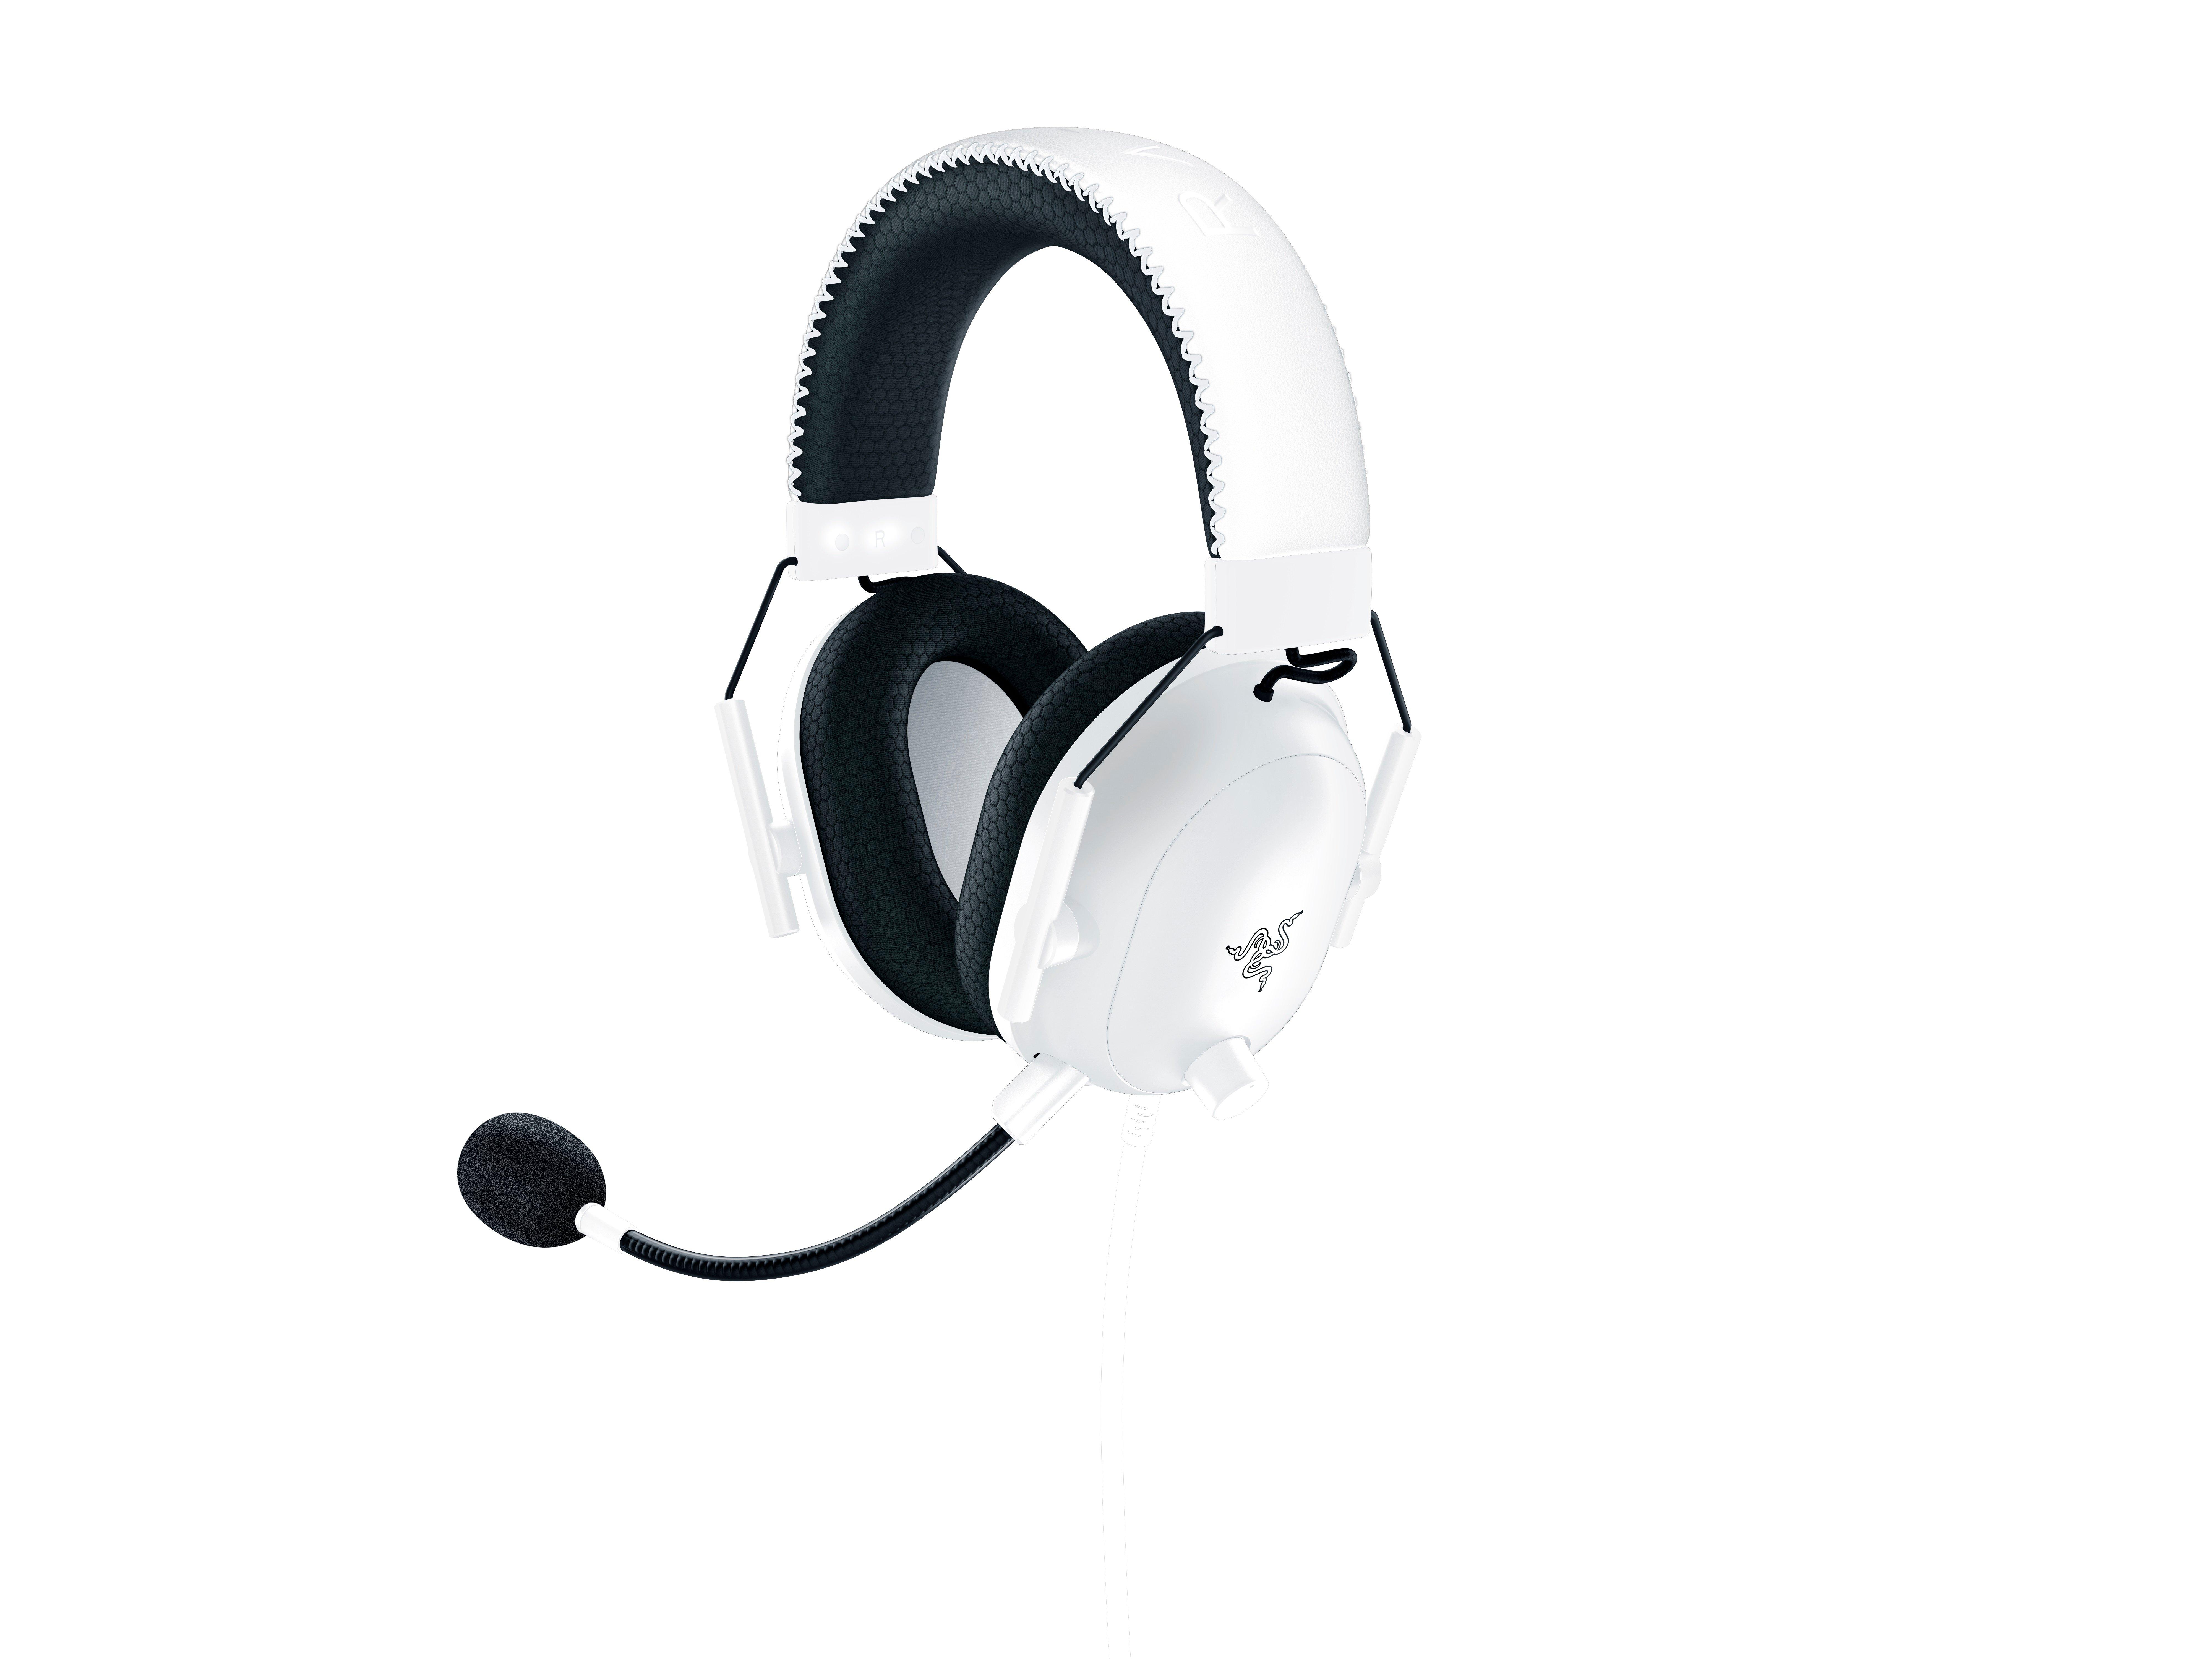 Razer BlackShark V2 Pro Wireless Gaming Headset | GameStop